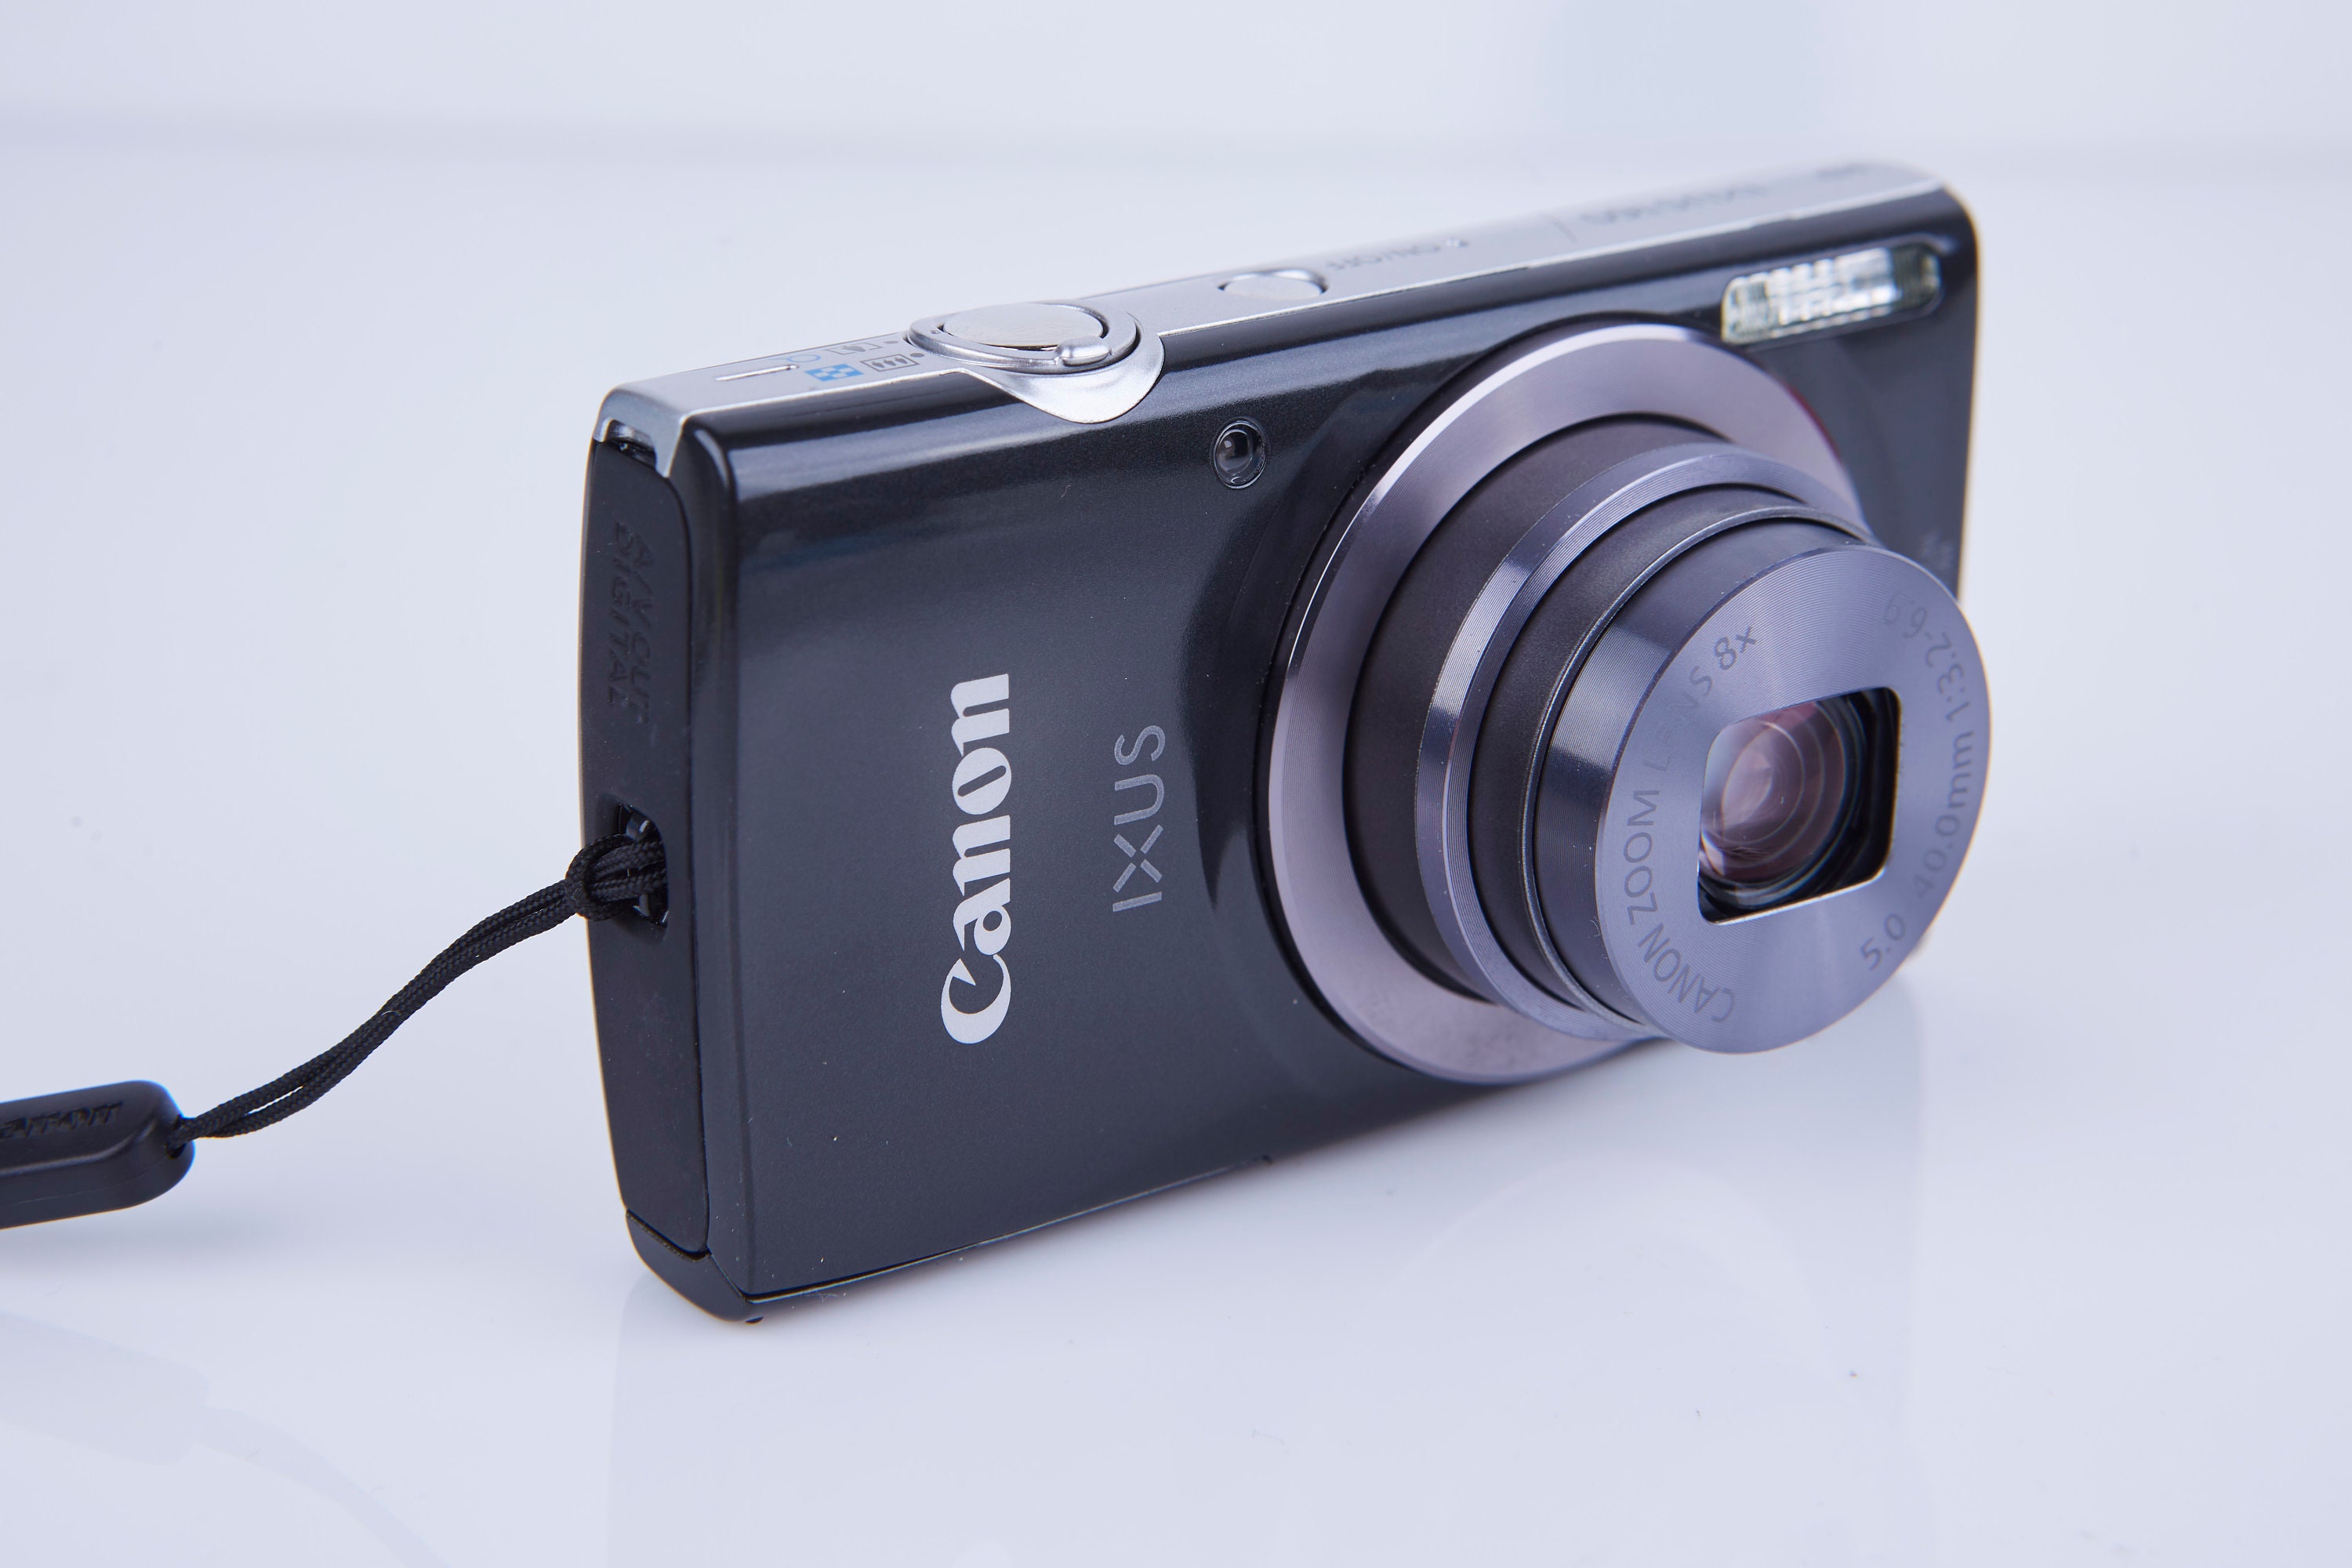 Canon PowerShot ELPH 160 Point & Shoot Camera 8x Optical Zoom 20 Megapixel  - white